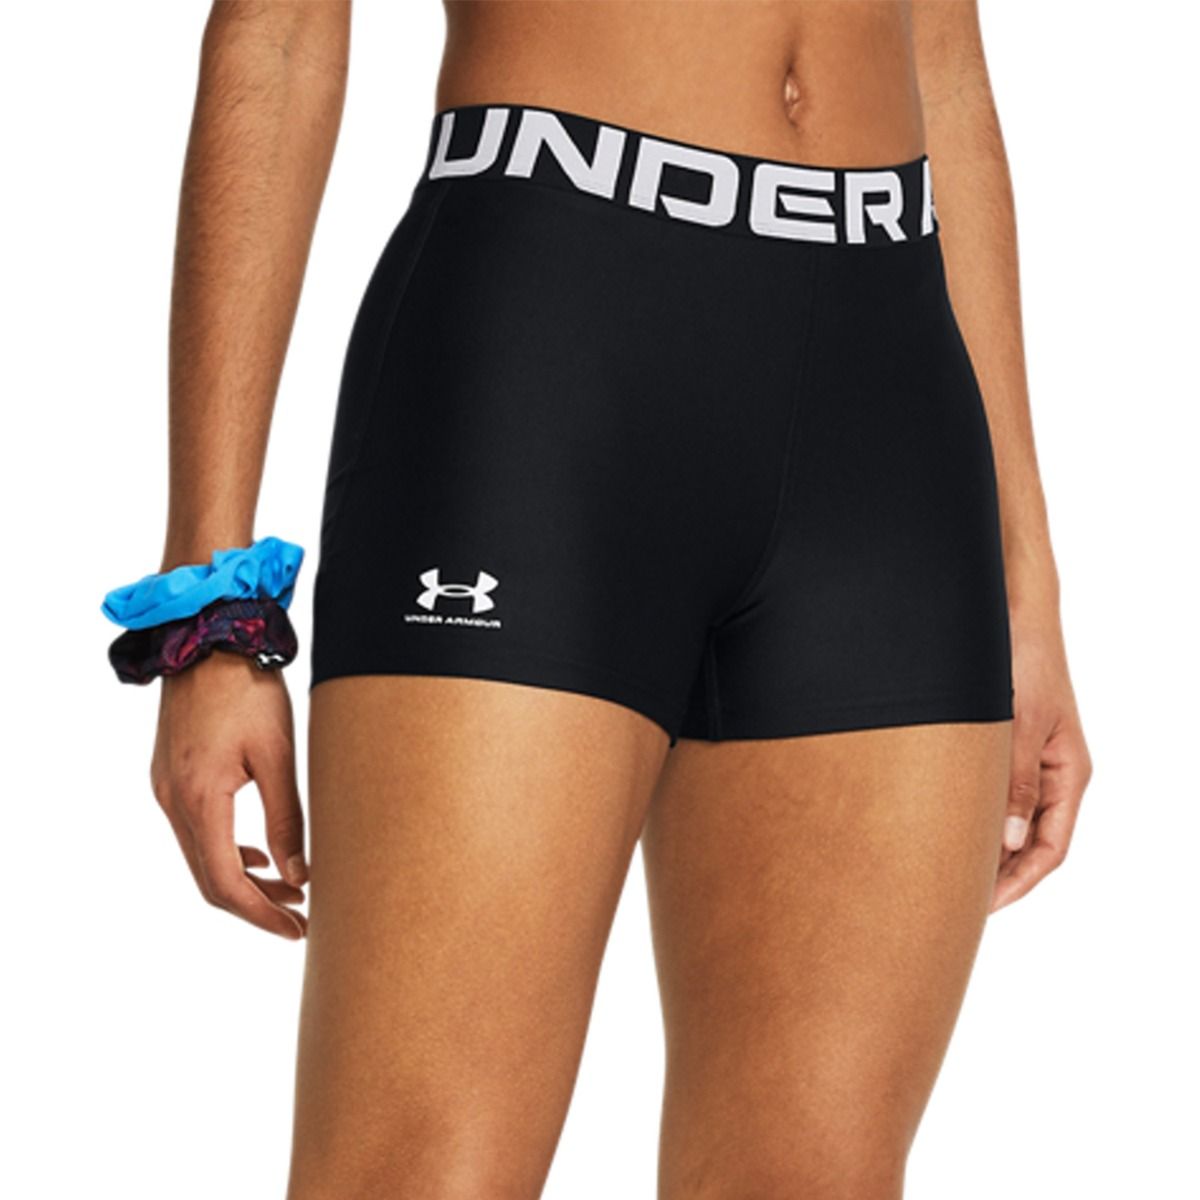 Under Armour Women's Spring HG Authentics Shorts